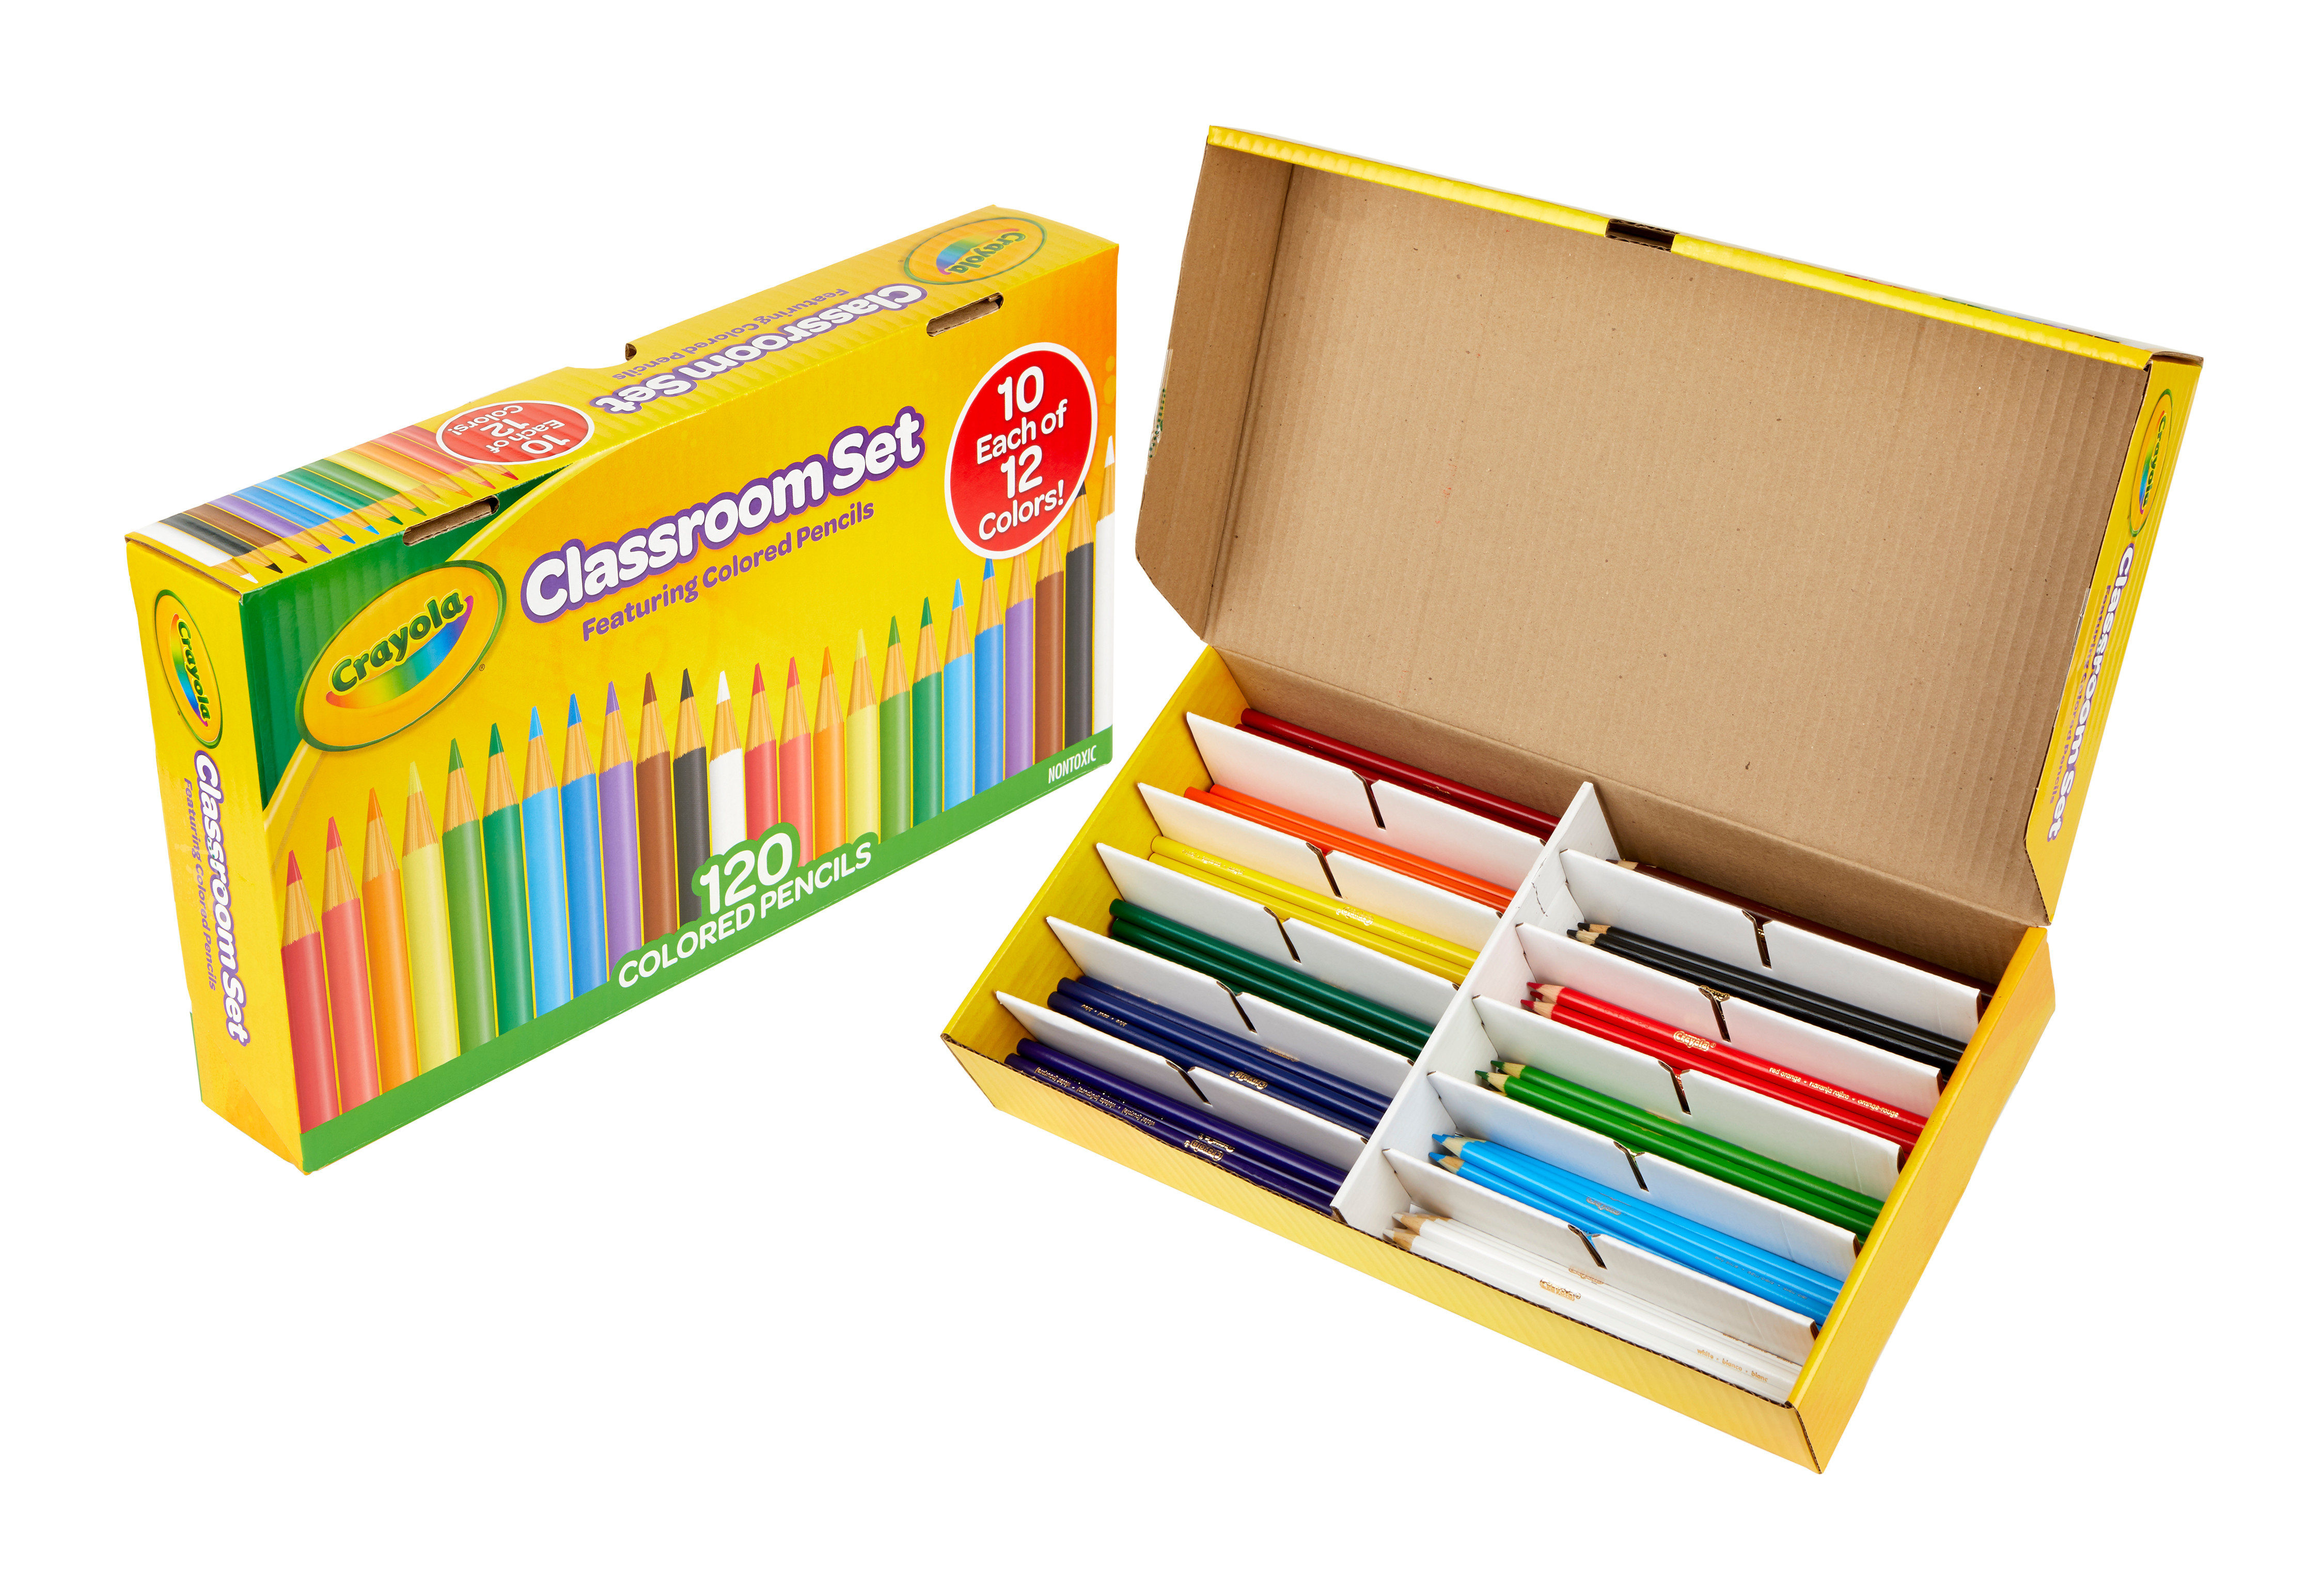 Crayola Classroom Set Colored Pencils, 120 Ct, Teacher Supplies, Teacher Gifts, Beginner Child - image 4 of 6